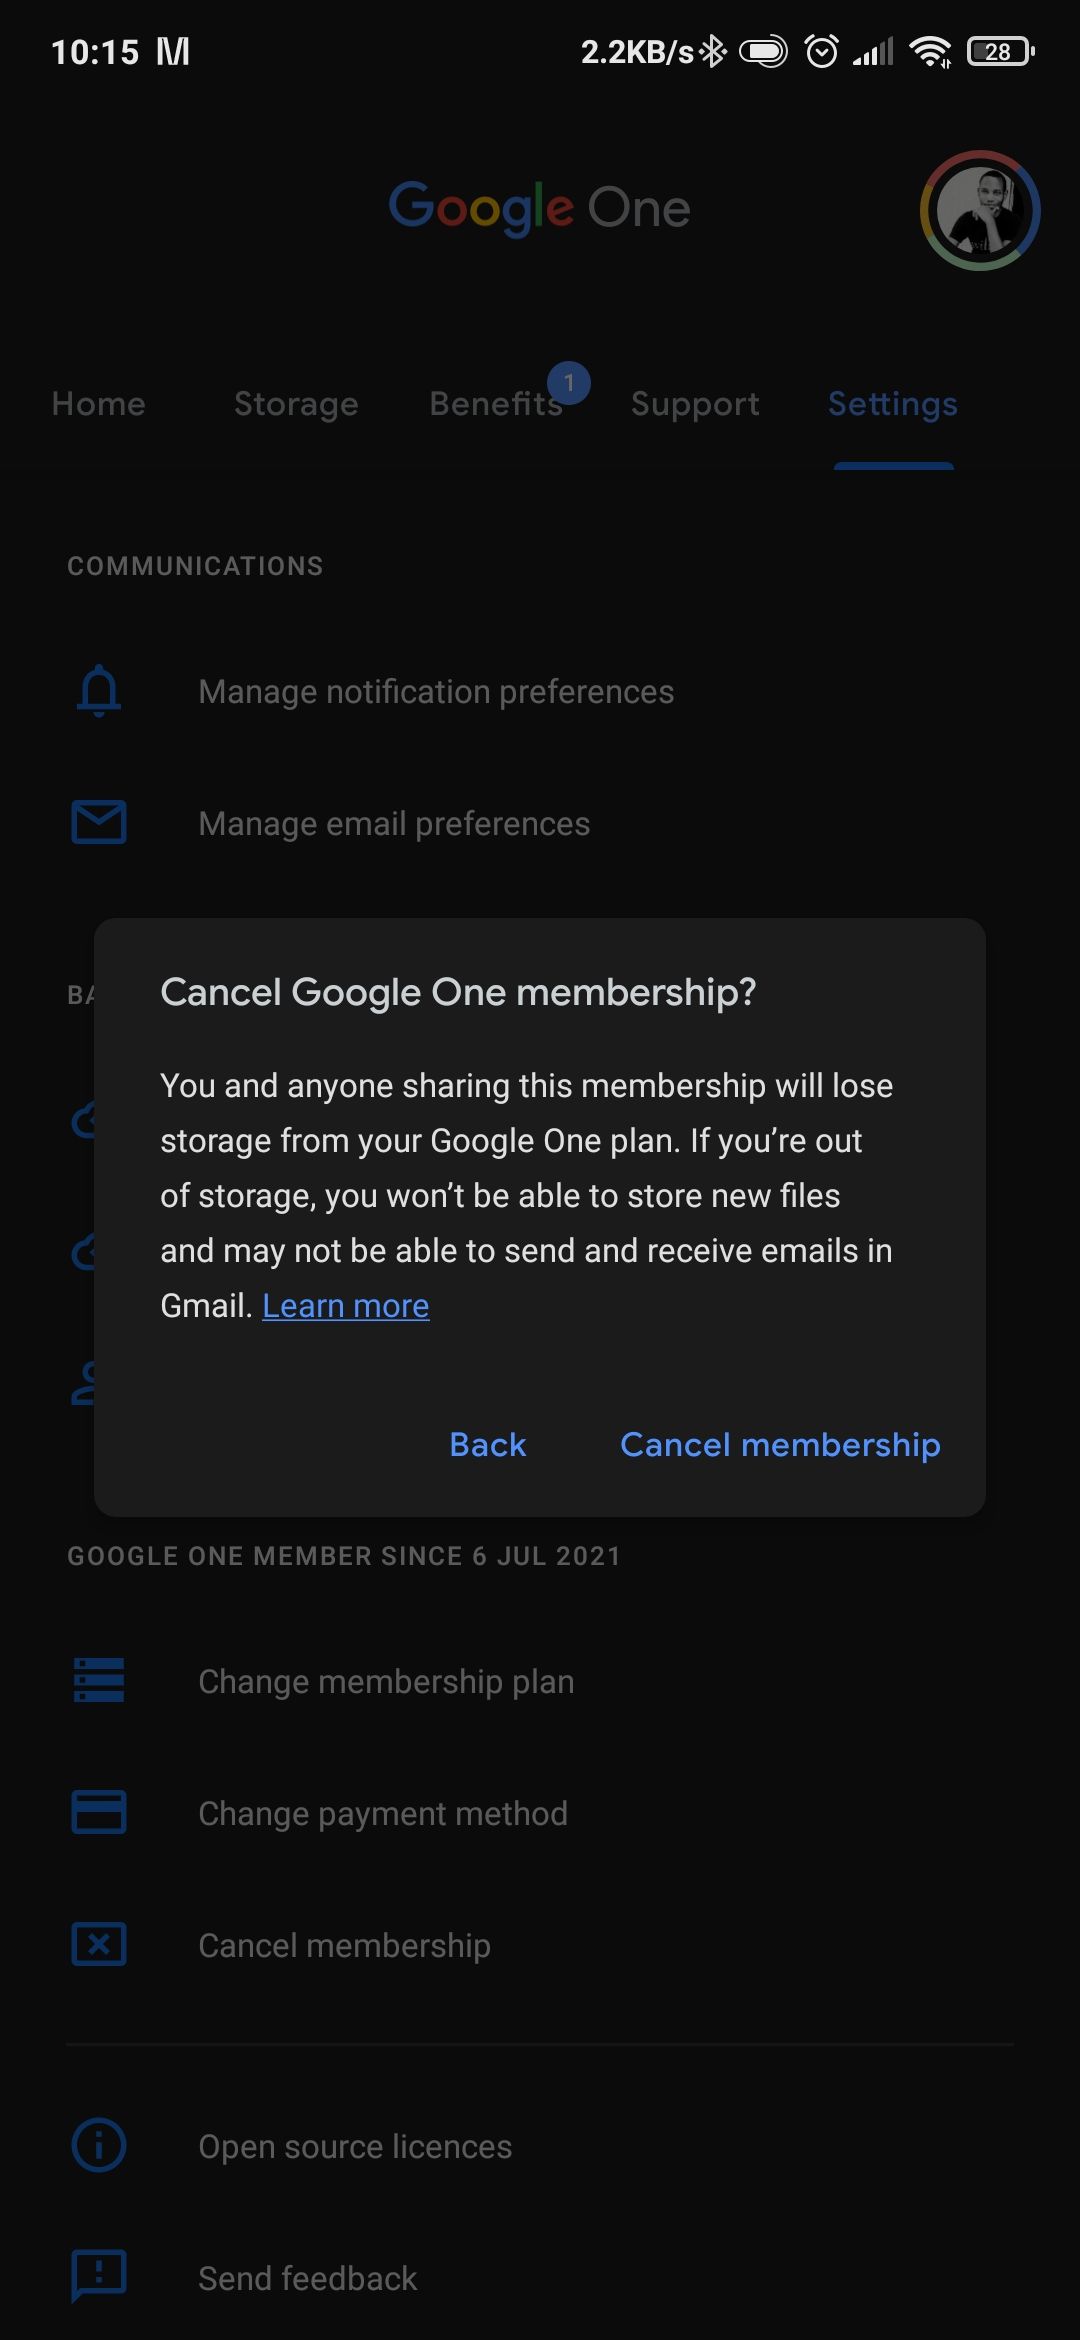 Cancel Google One membership confirmation pop-up